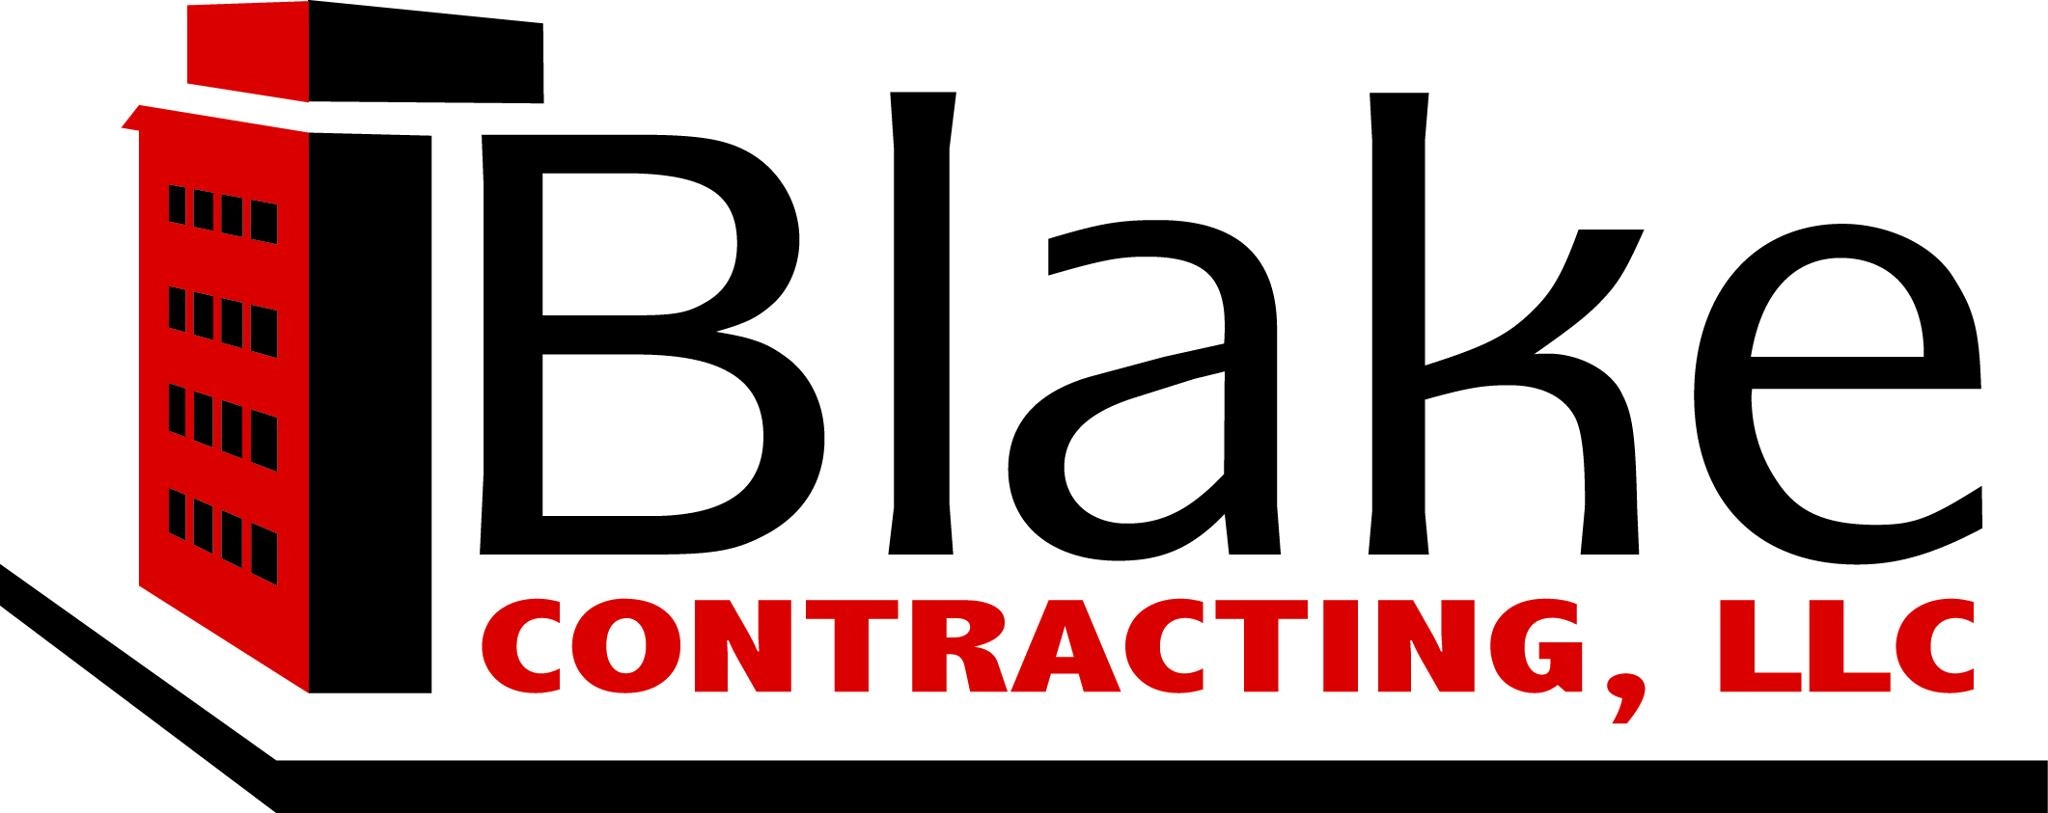 Blake Contracting, LLC Logo